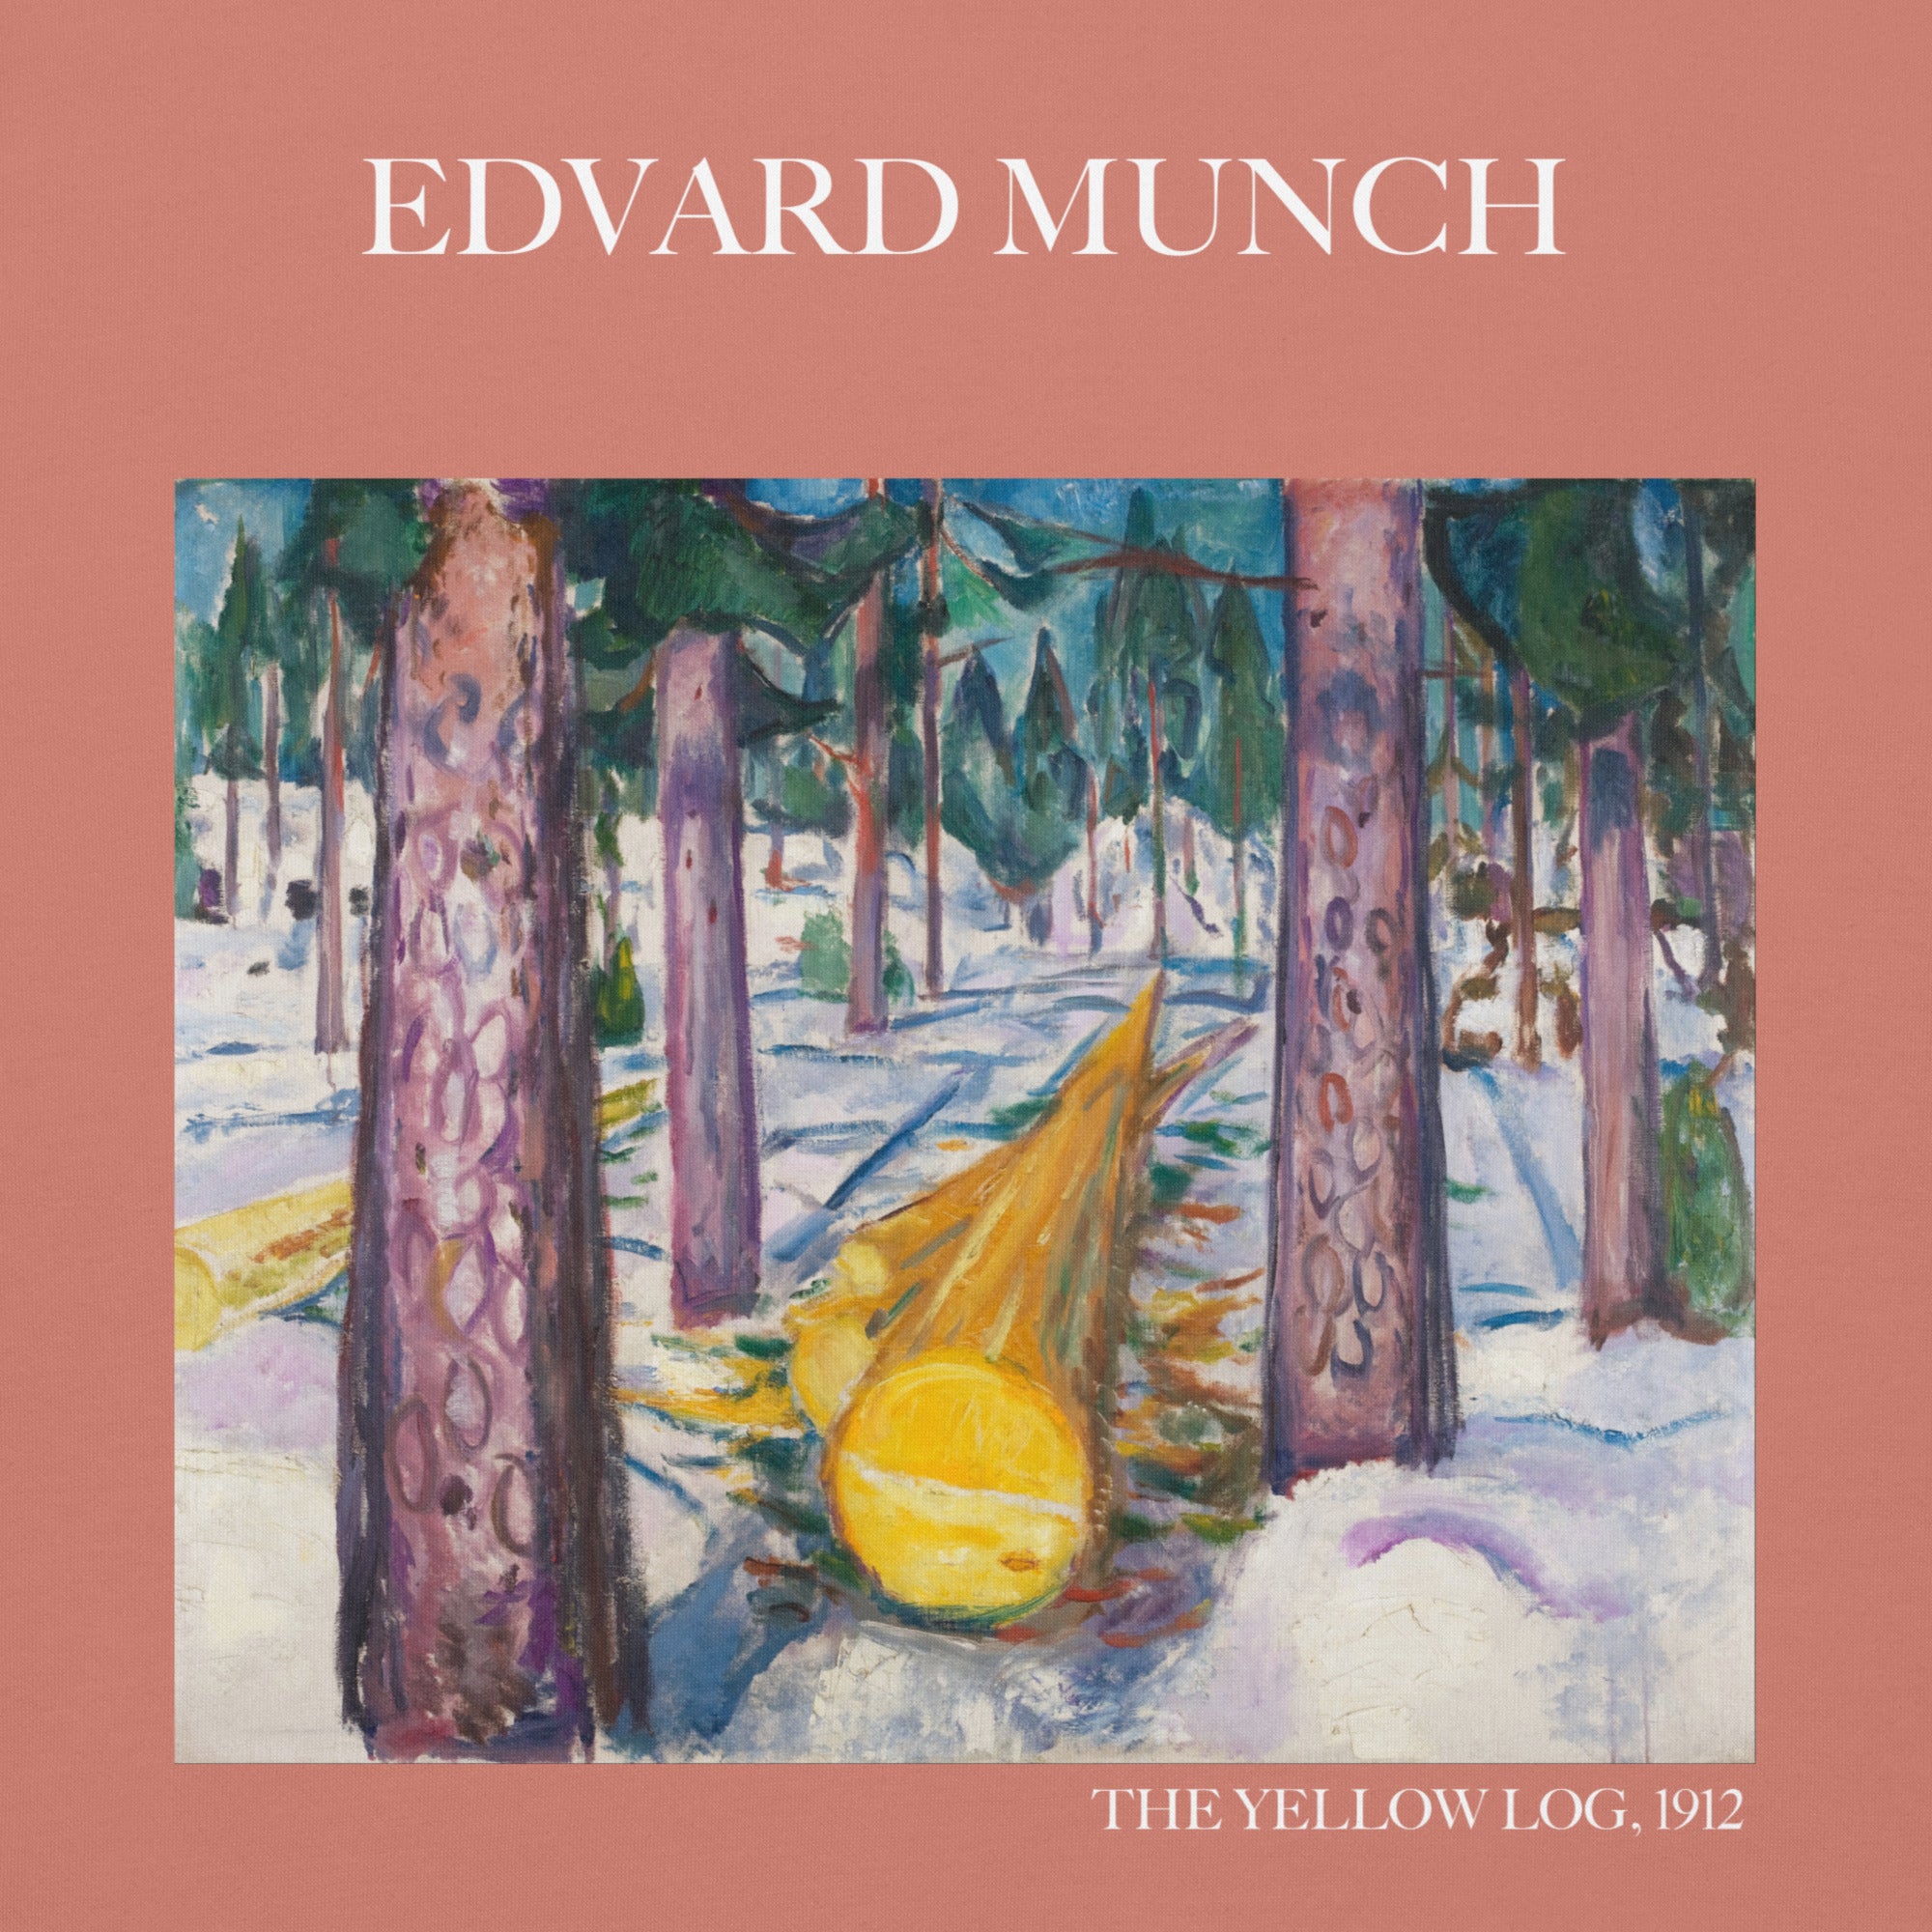 Edvard Munch „Der gelbe Baumstamm“ – Berühmtes Gemälde – Kapuzenpullover | Unisex Premium Kunst-Kapuzenpullover